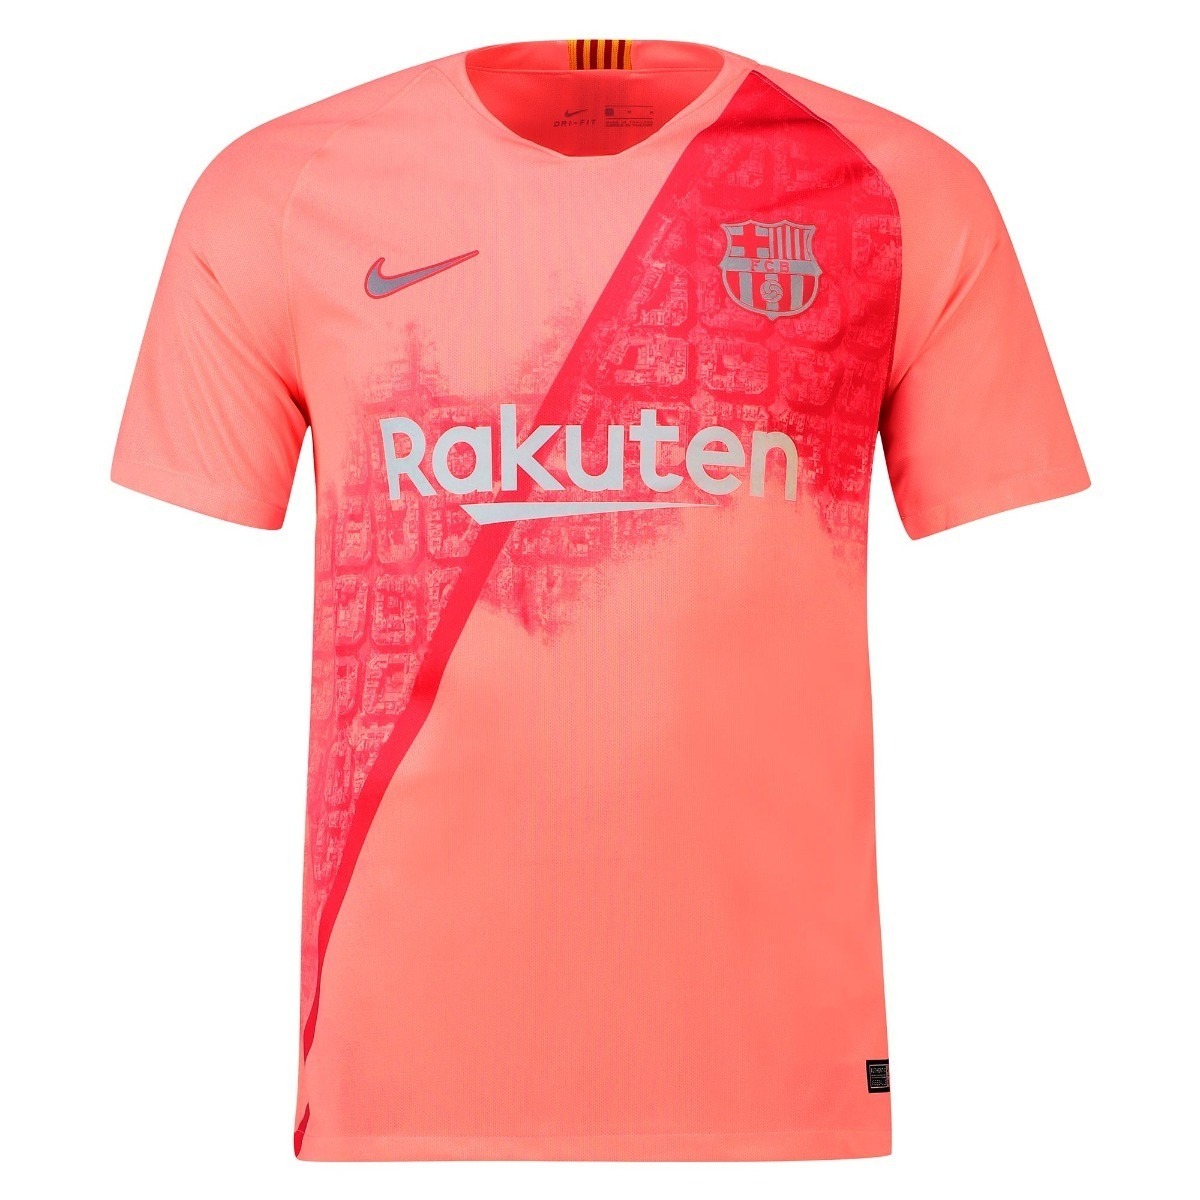 Camiseta Do Barcelona Rosa - Nike - 2018 / 2019 Frete ...